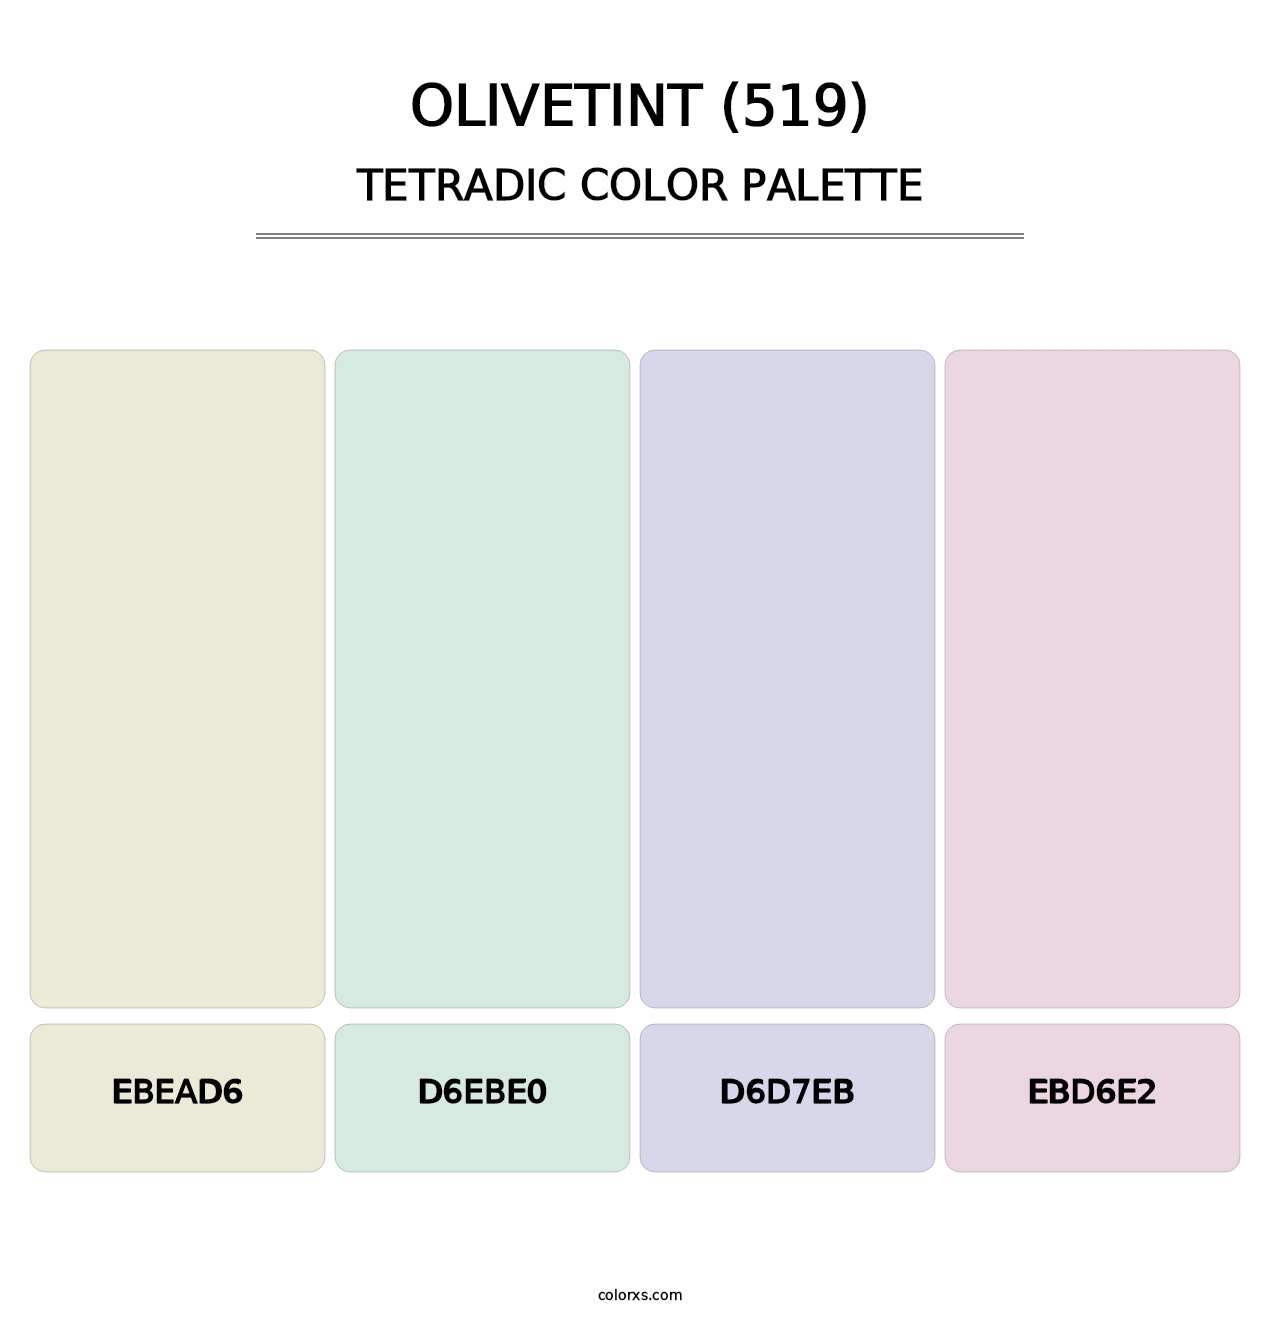 Olivetint (519) - Tetradic Color Palette